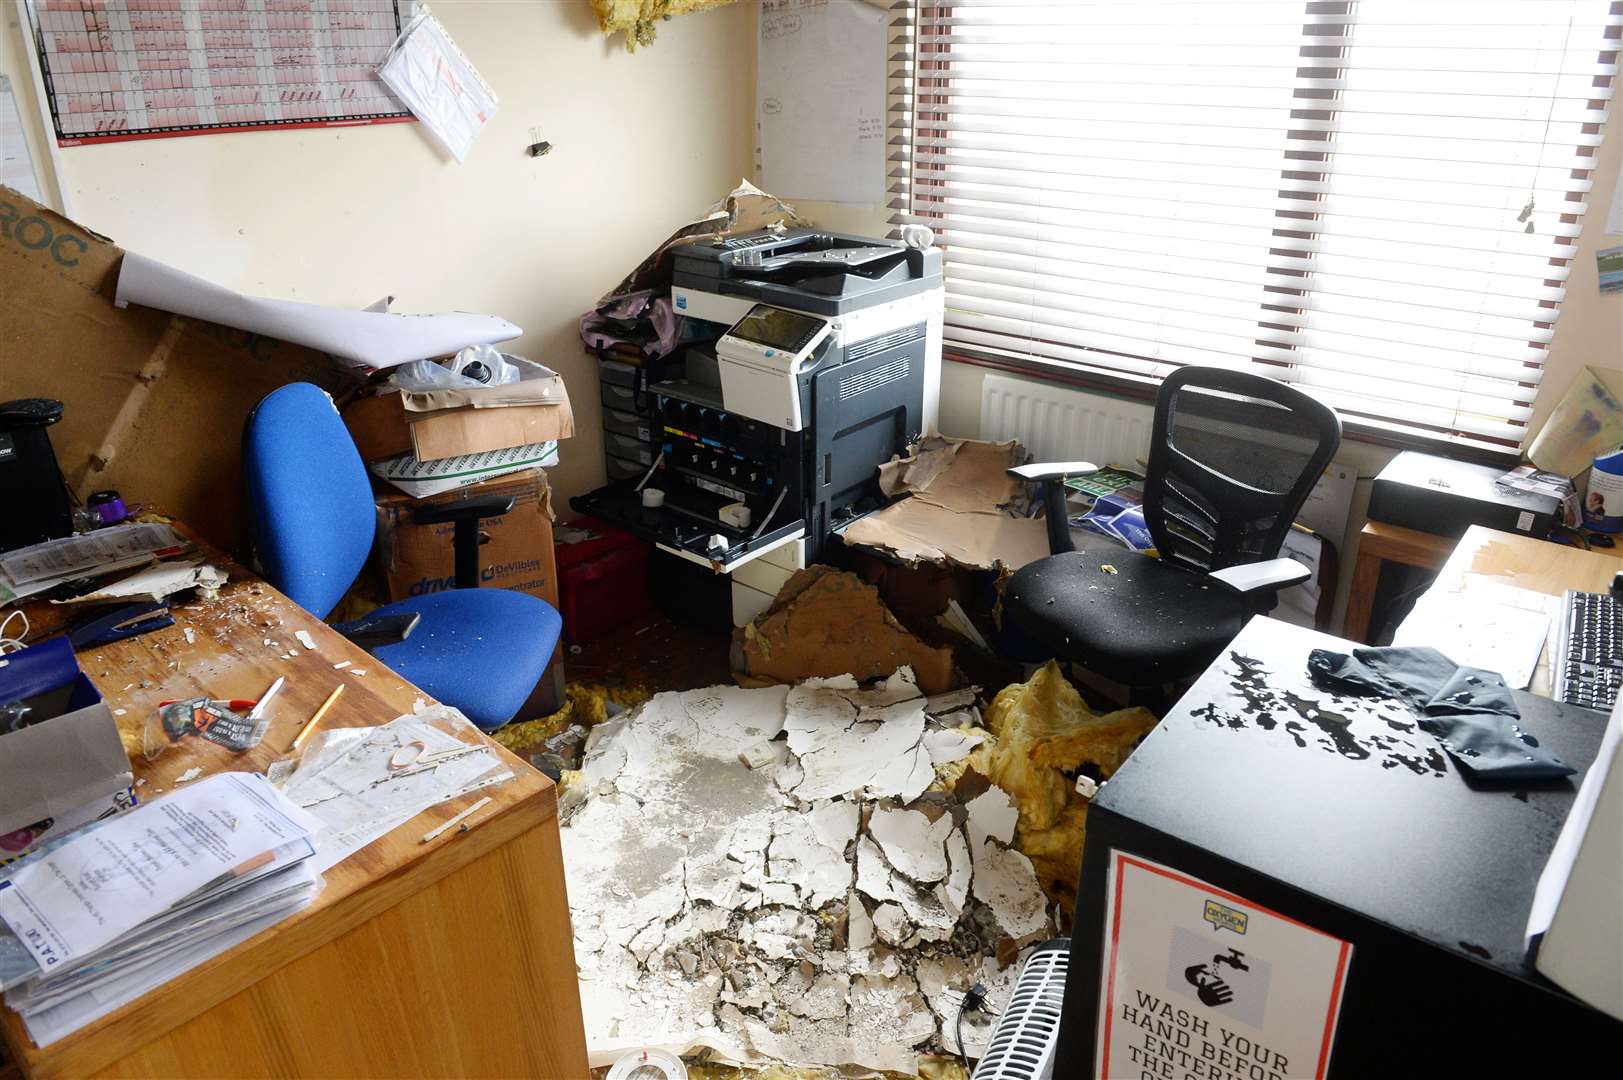 The flood damaged office equipment.